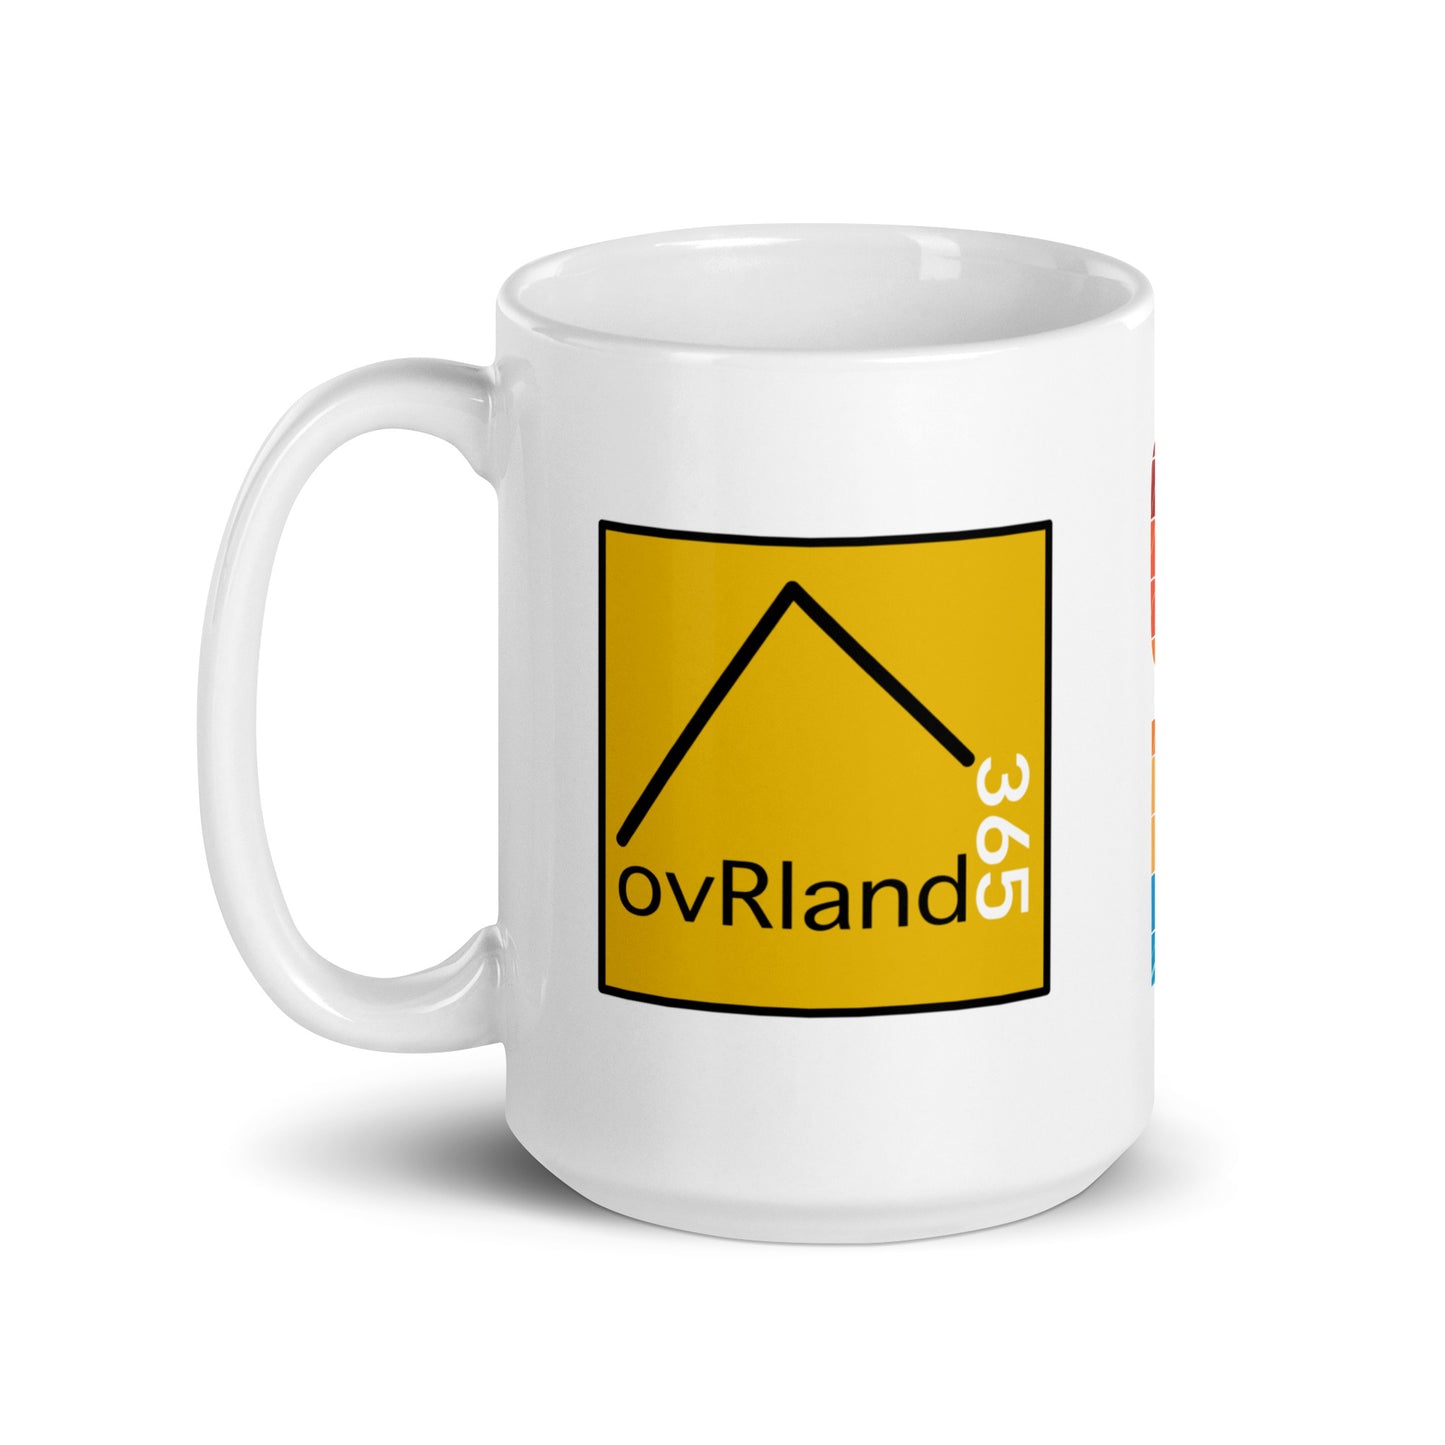 OVER LAND overlanding 15 oz coffee mug. back view. overland365.com